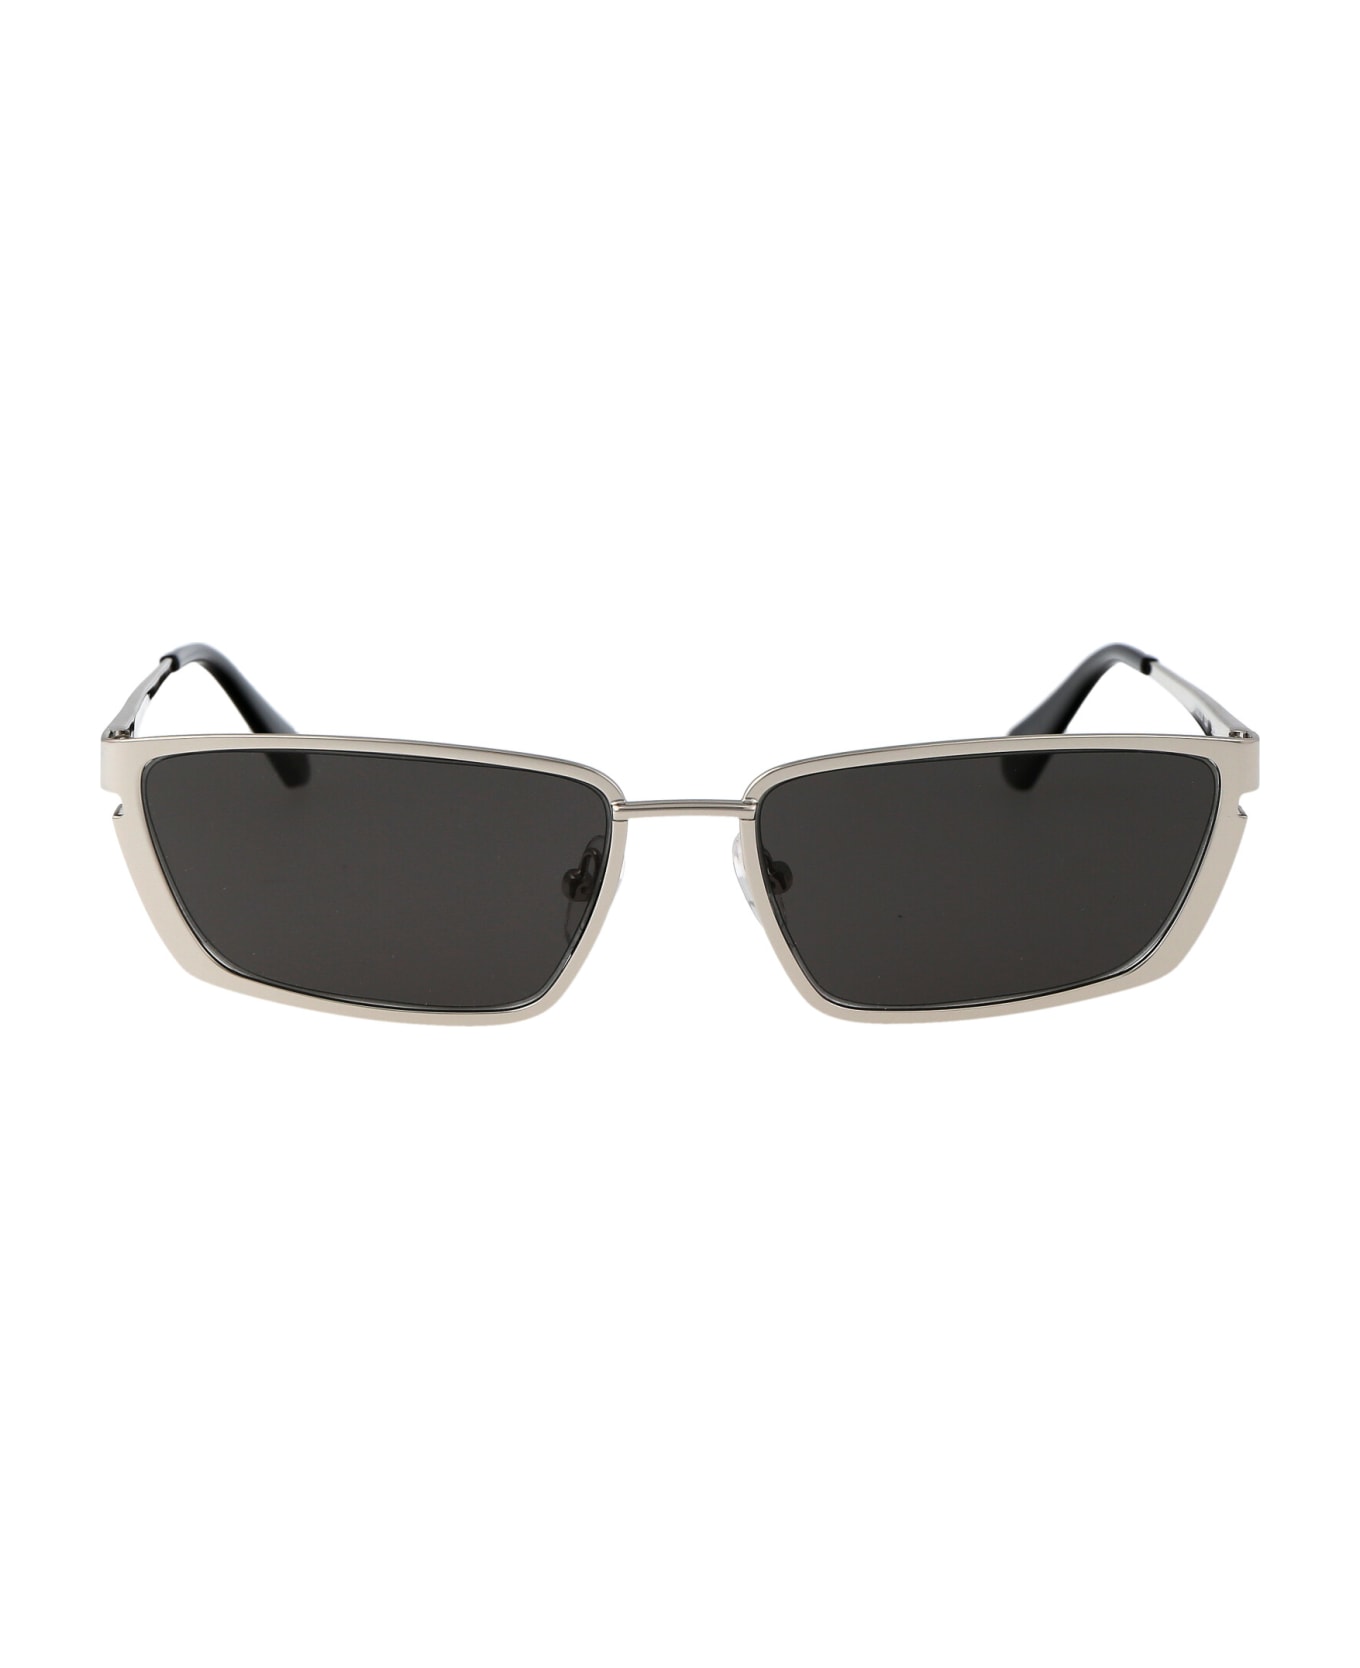 Off-White Richfield Sunglasses - 7207 SILVER